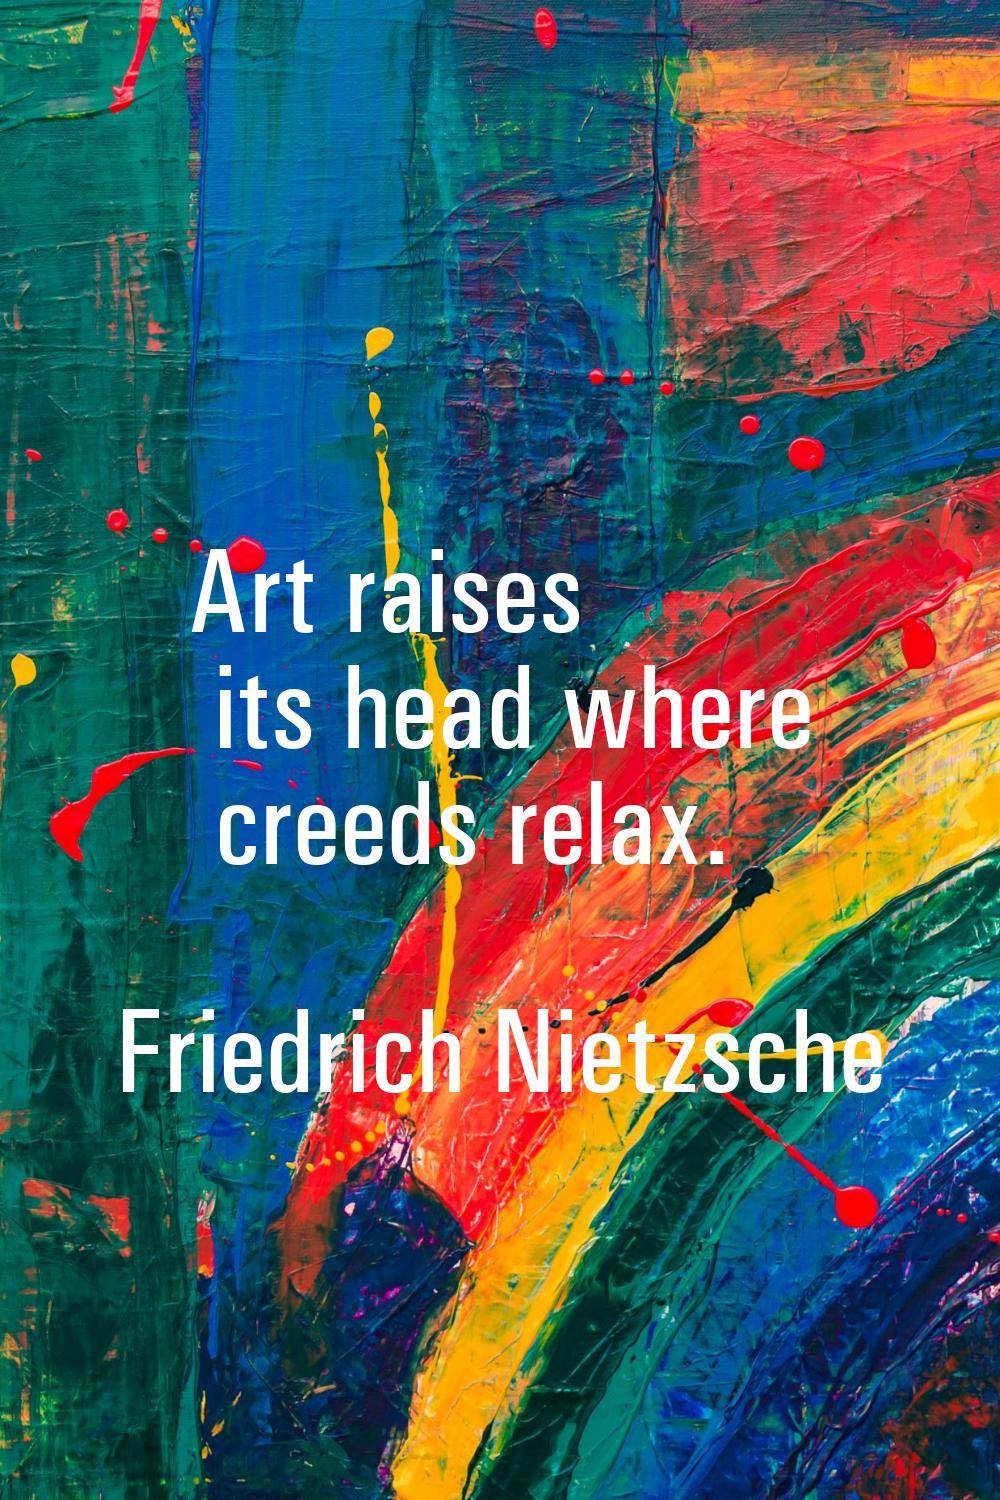 Art raises its head where creeds relax.